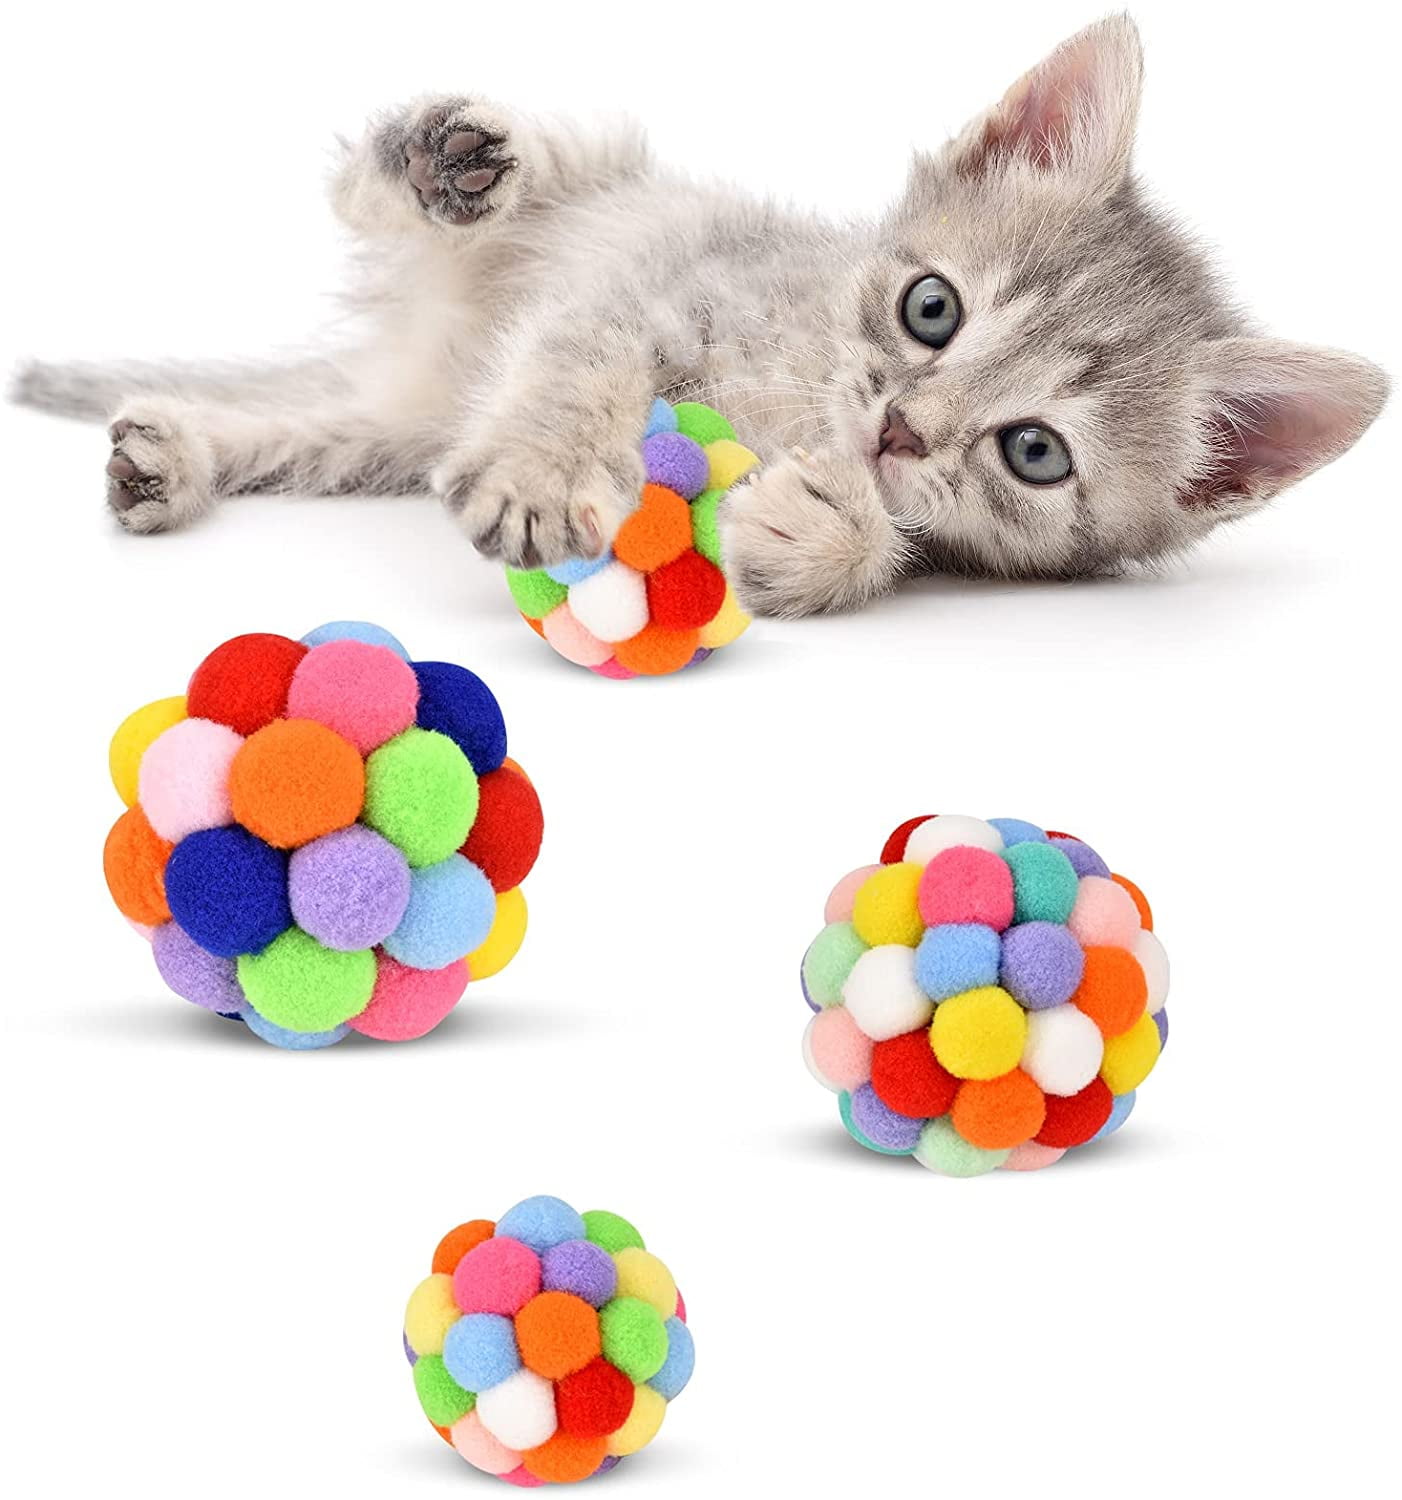 Pet Cat Kitten Soft Plush Foam Rainbow Play Balls Funny Activity Toys Colors 